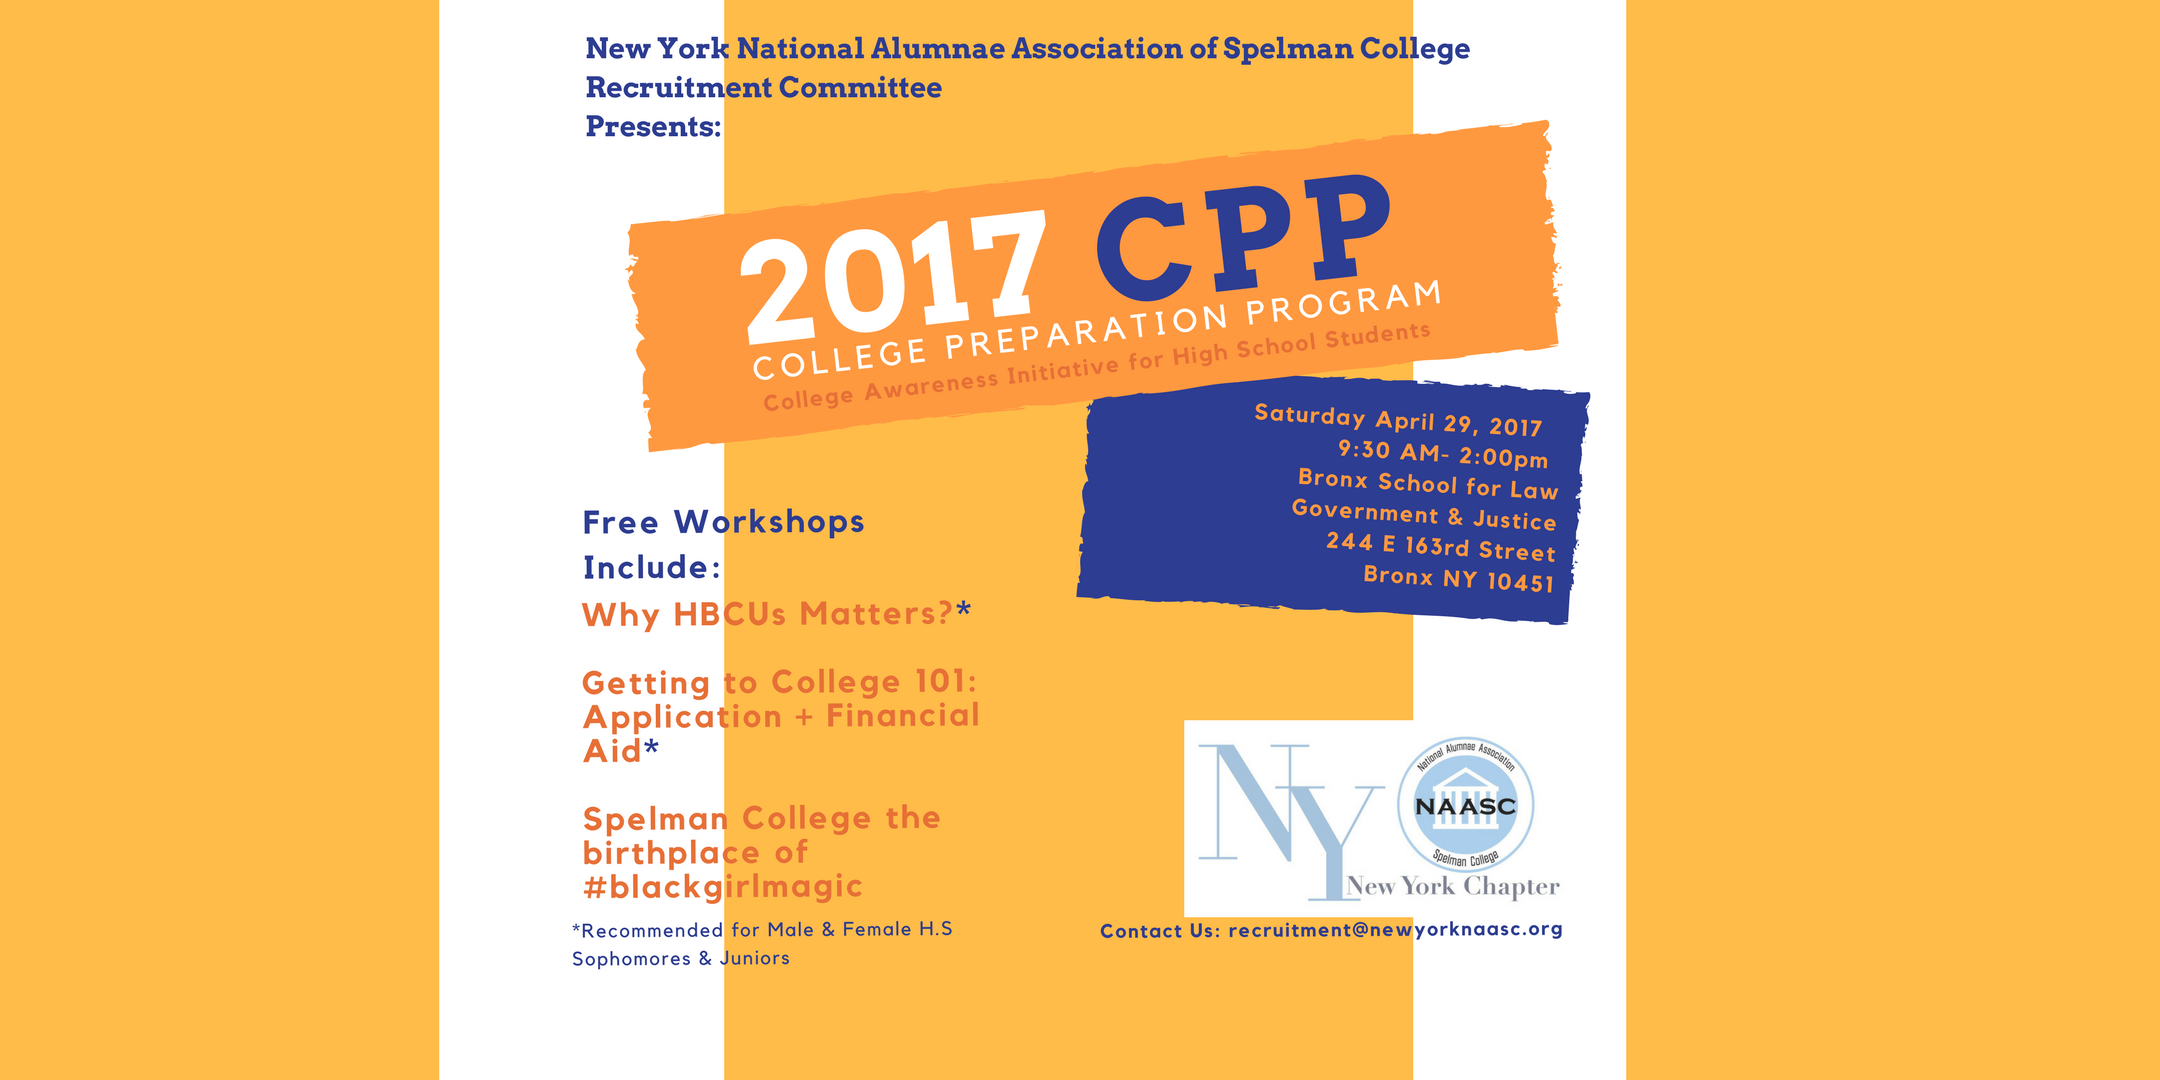 NY-NAASC Annual College Prep Program 